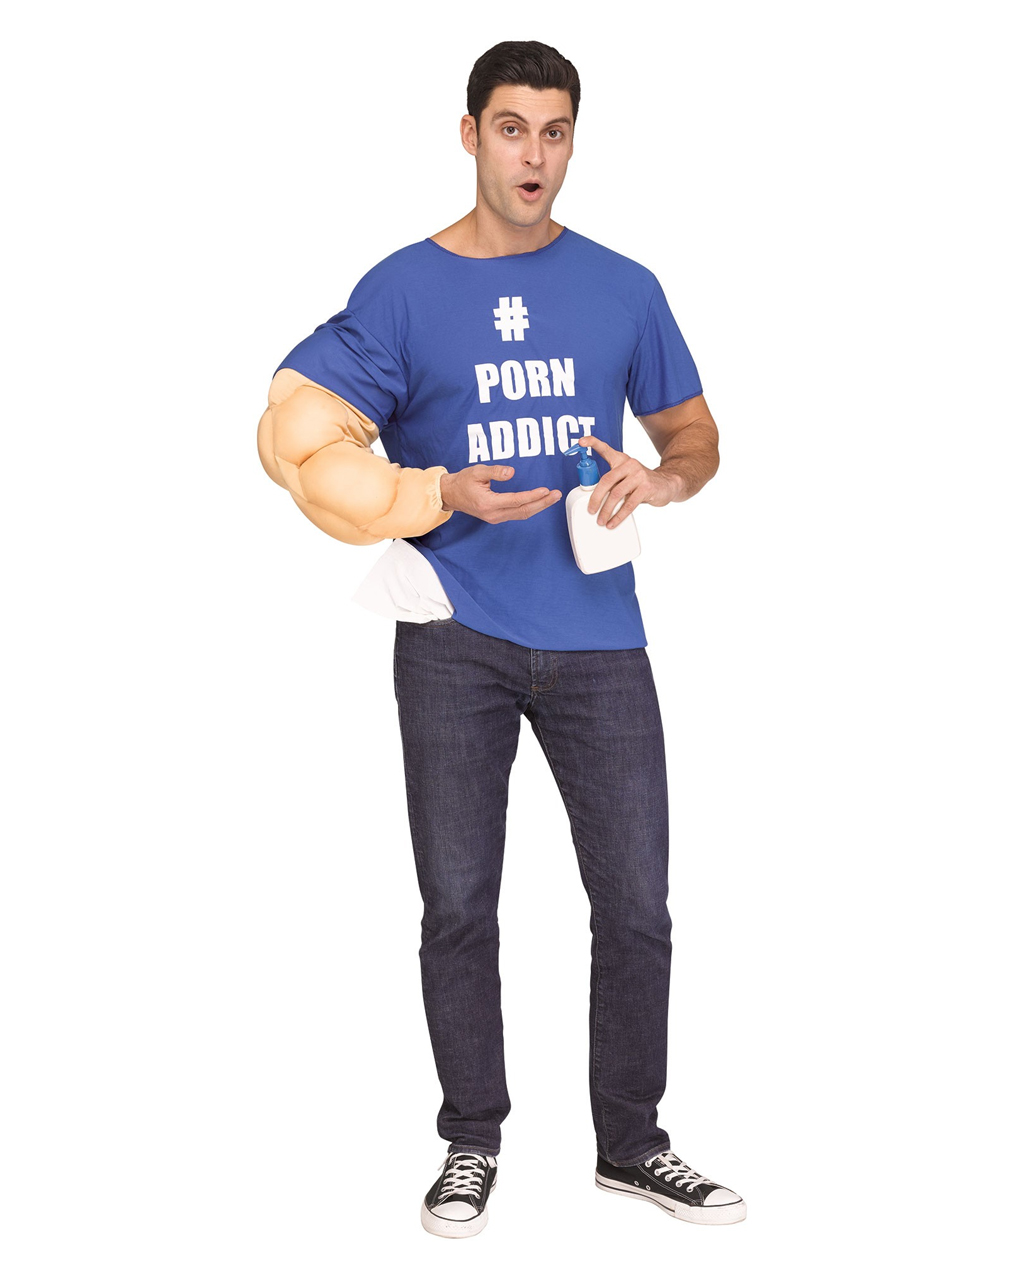 Bachelor Porn Flintstones - Porn Addict Costume